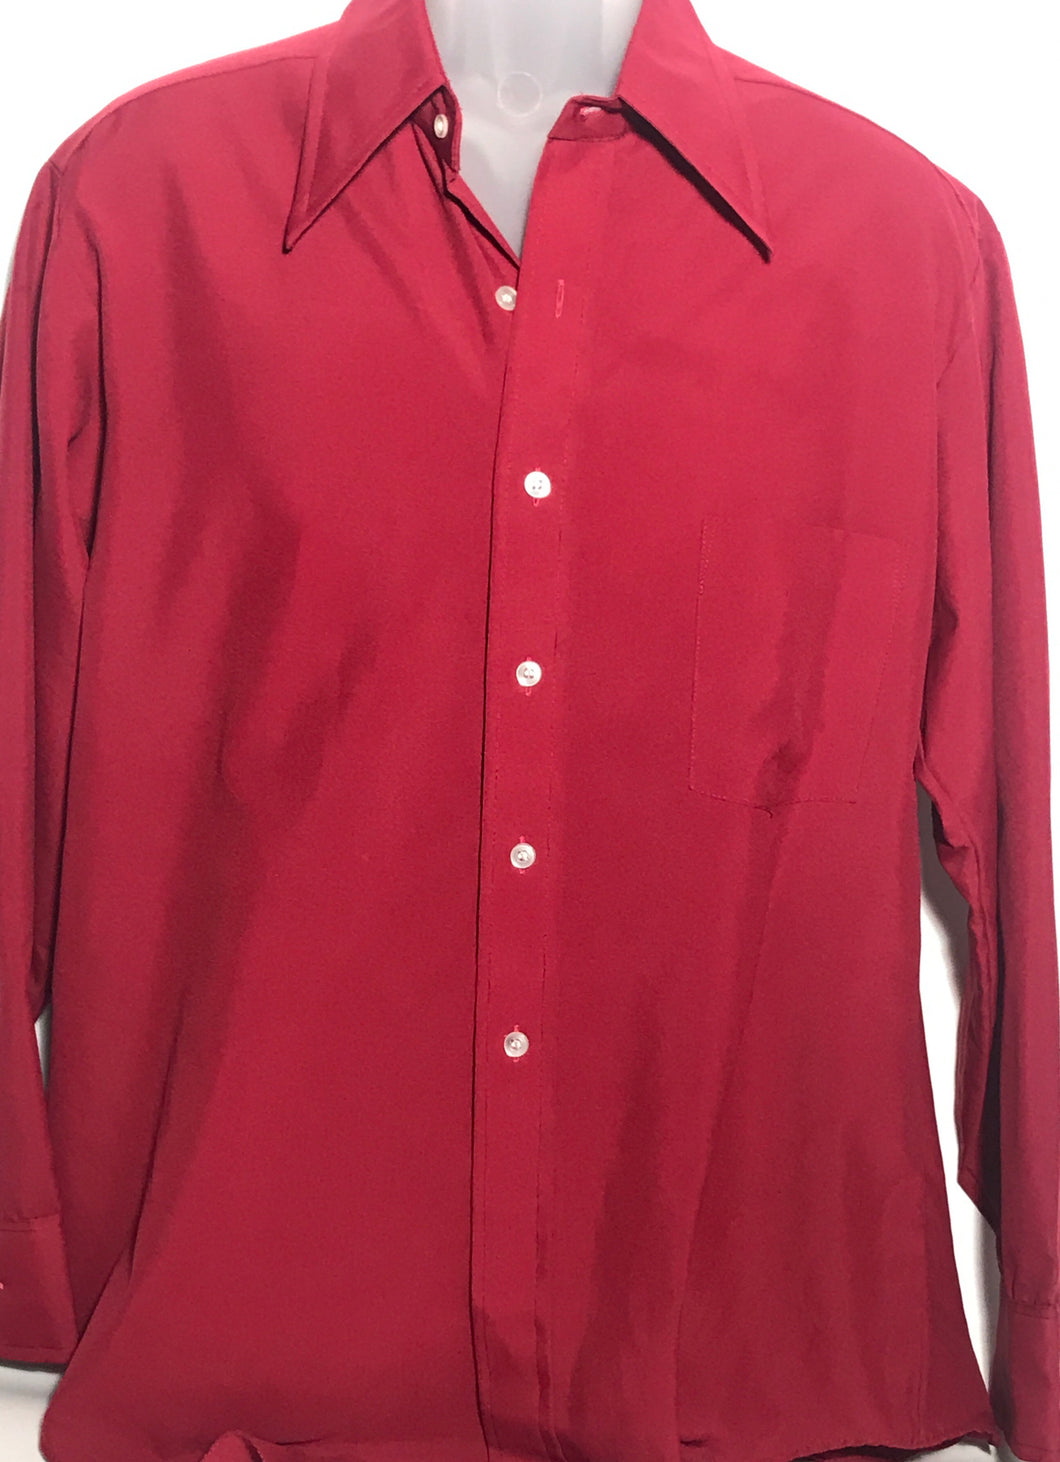 Vintage 1970s Sears Men's Maroon Dress Shirt Size Large RENTAL L933